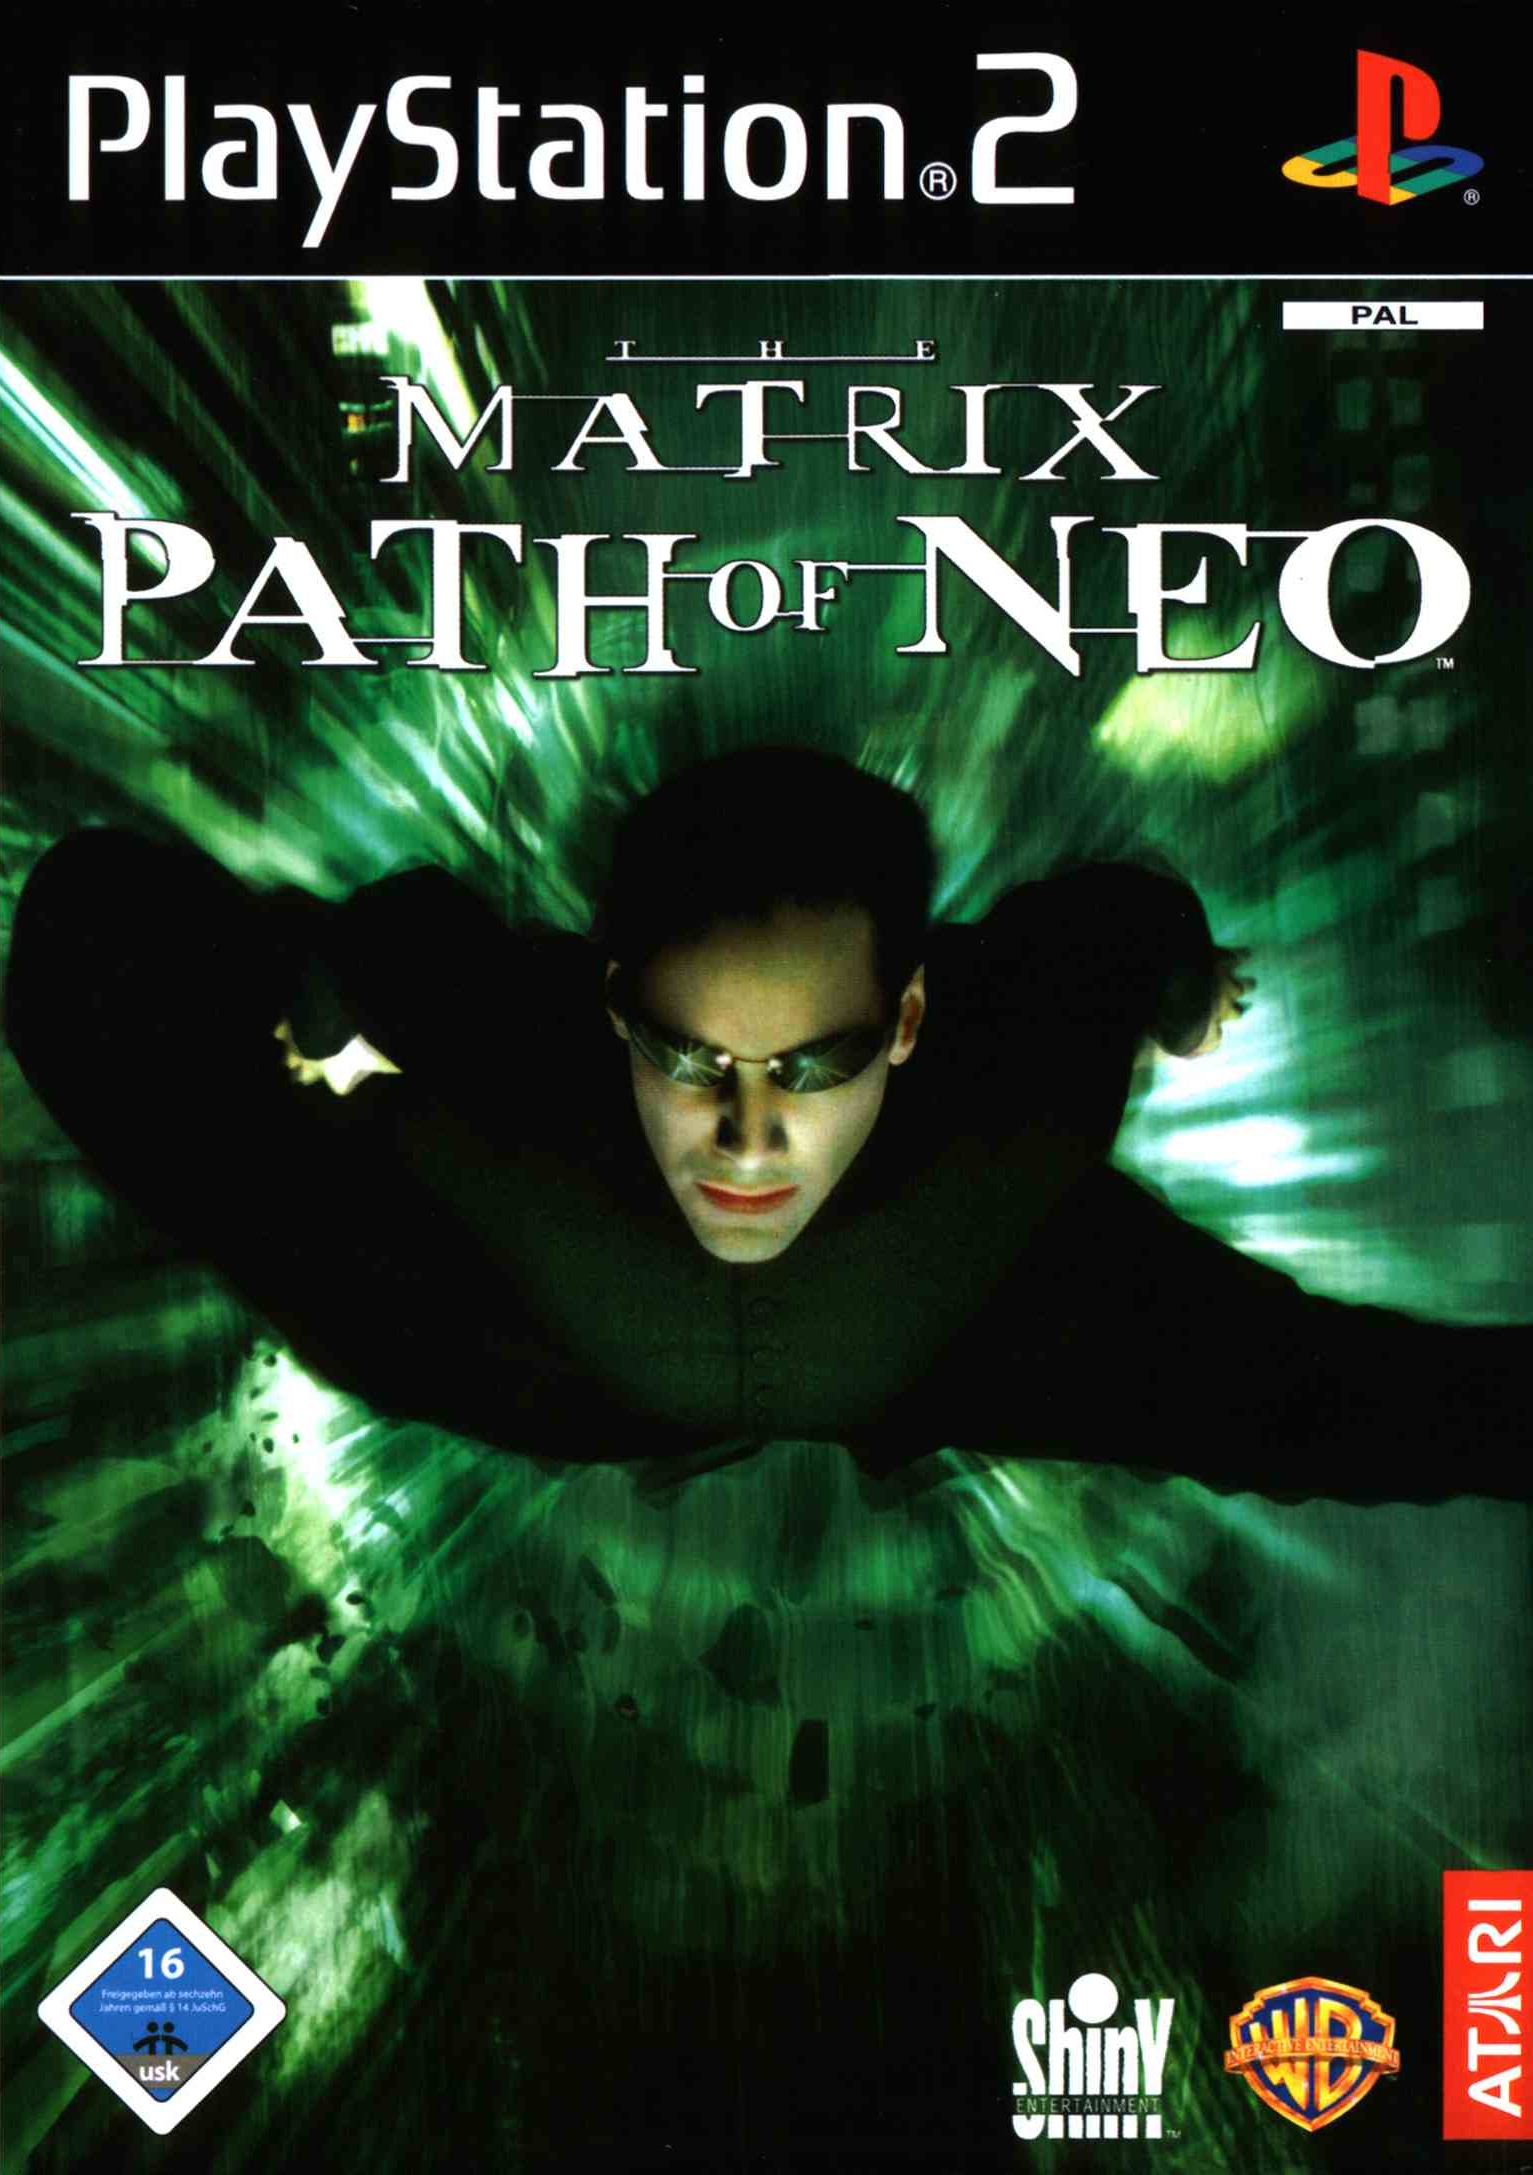 matrix path of neo pc cheat codes